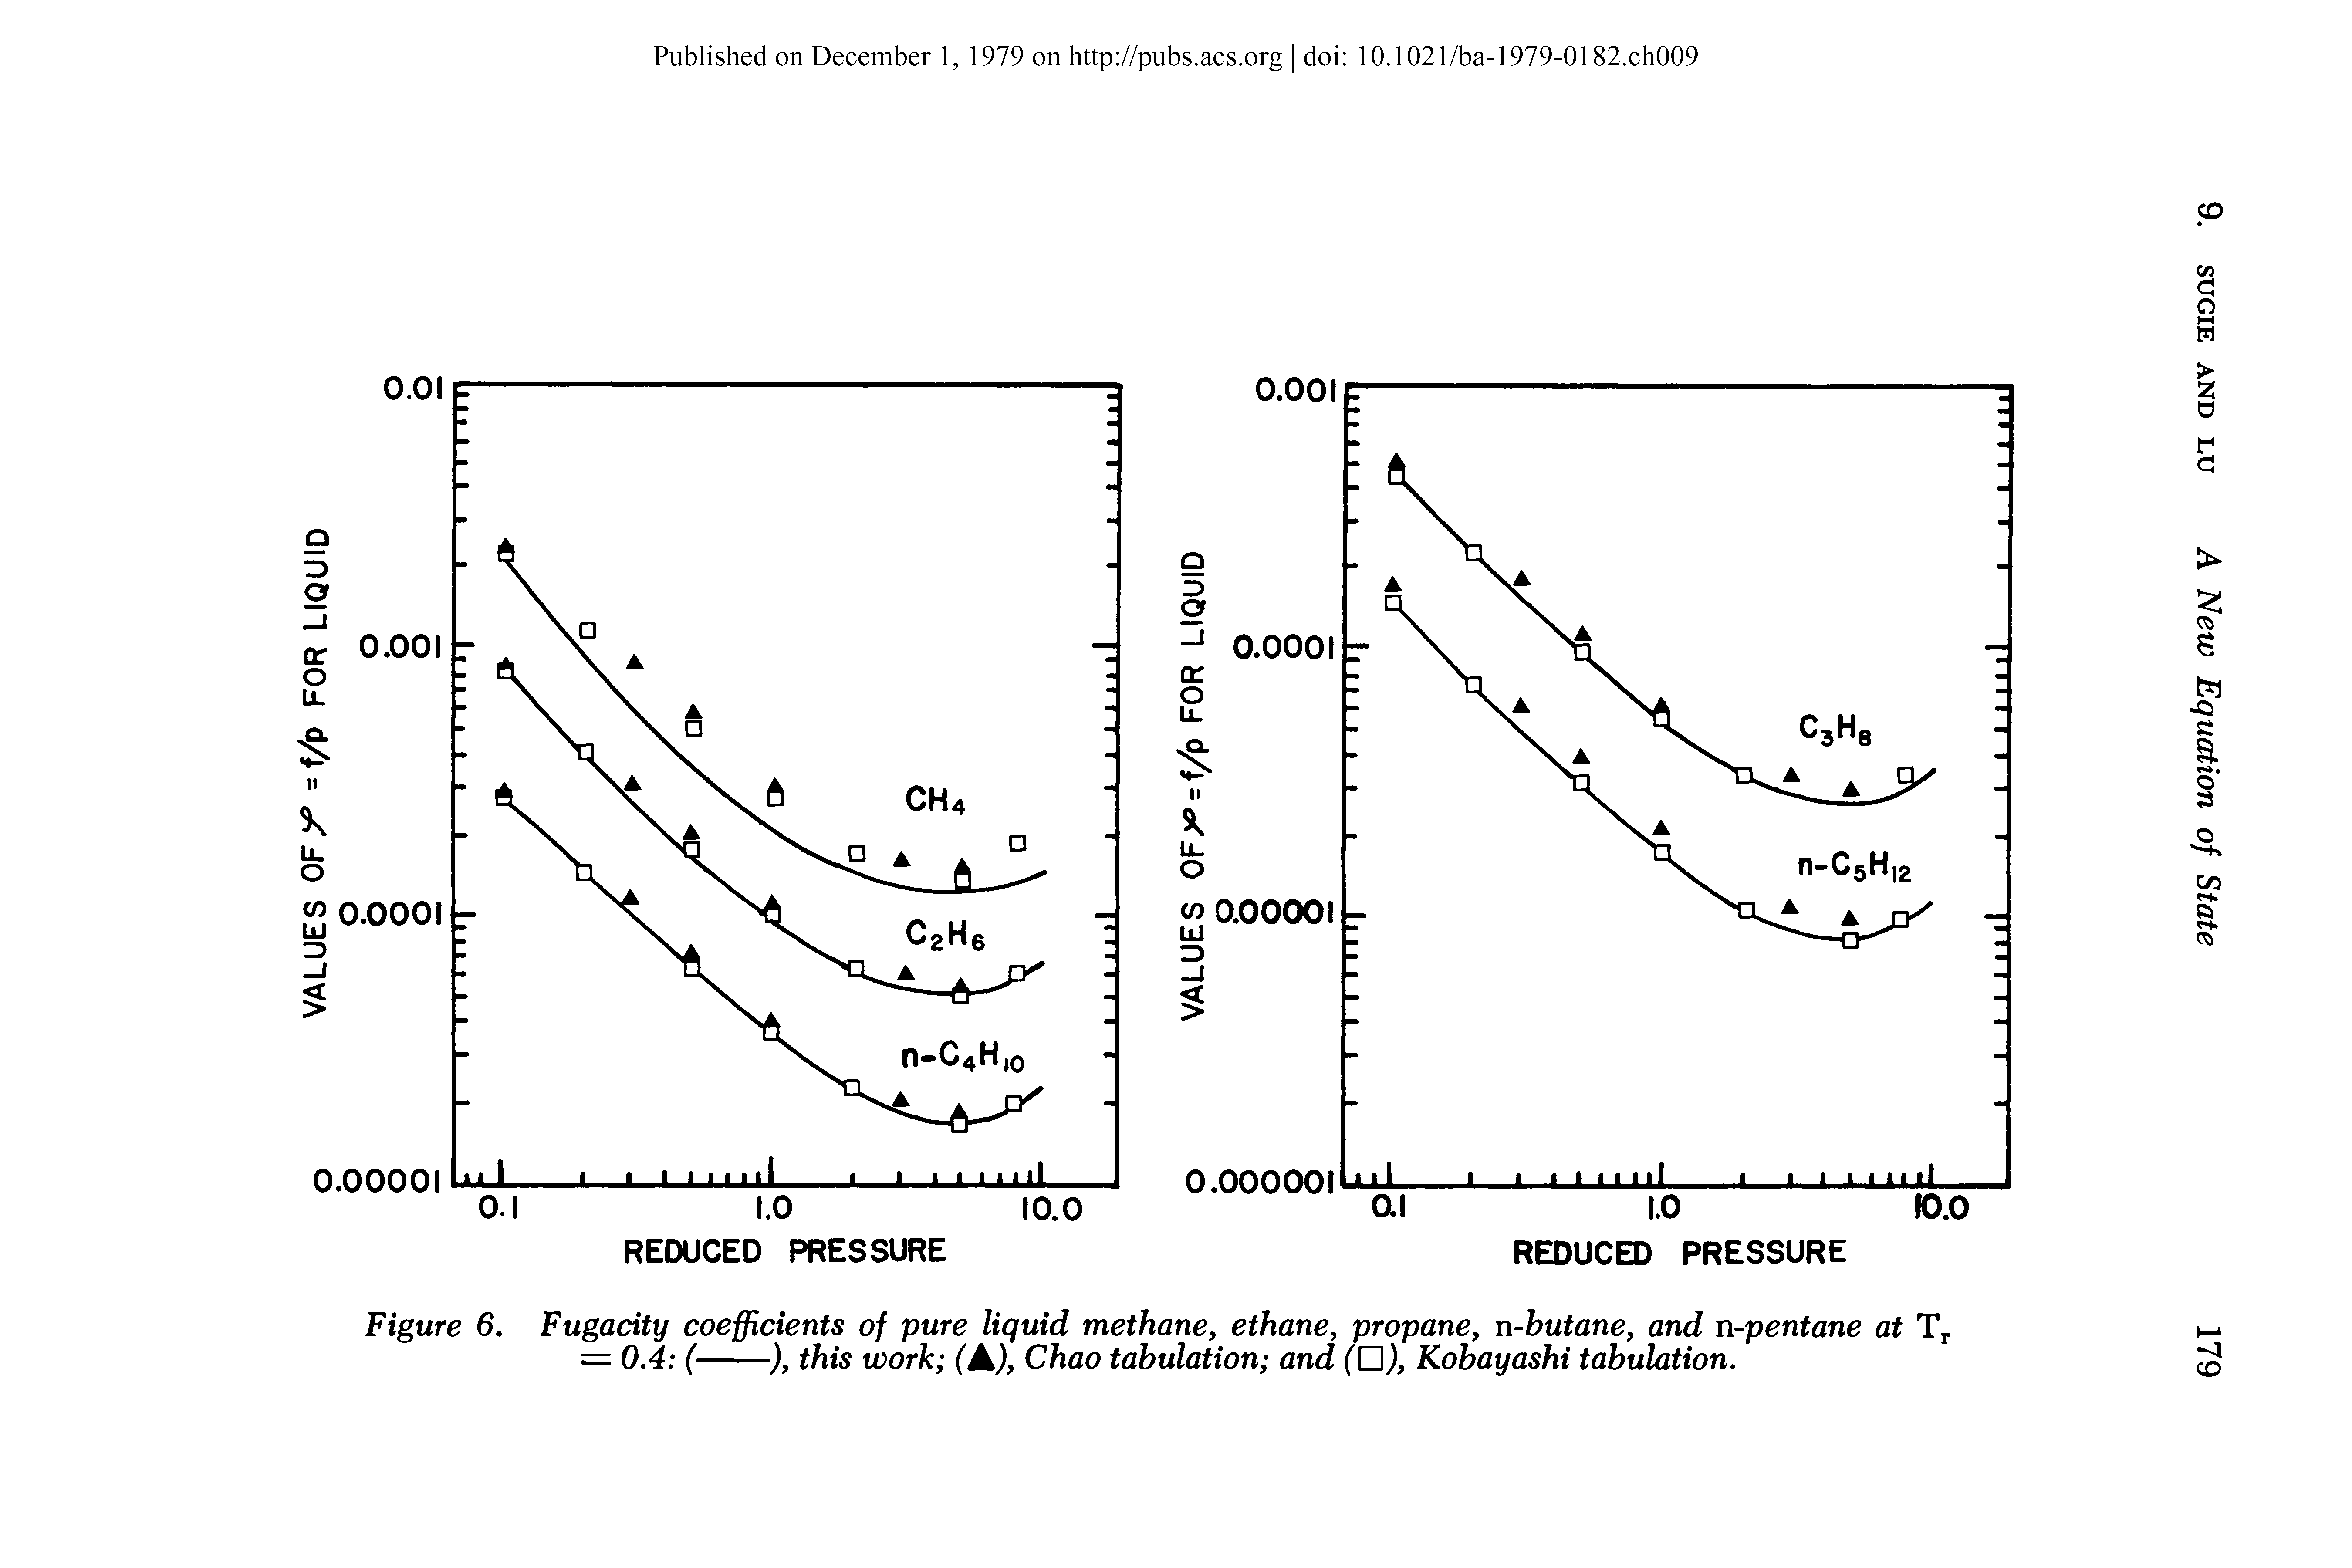 Figure 6. Fugacity coefficients of pure liquid methane, ethane, propane, n-butane, and n-pentane at Tr = 0.4 (----------------------), this work (A), Chao tabulation and ( J), Kobayashi tabulation.